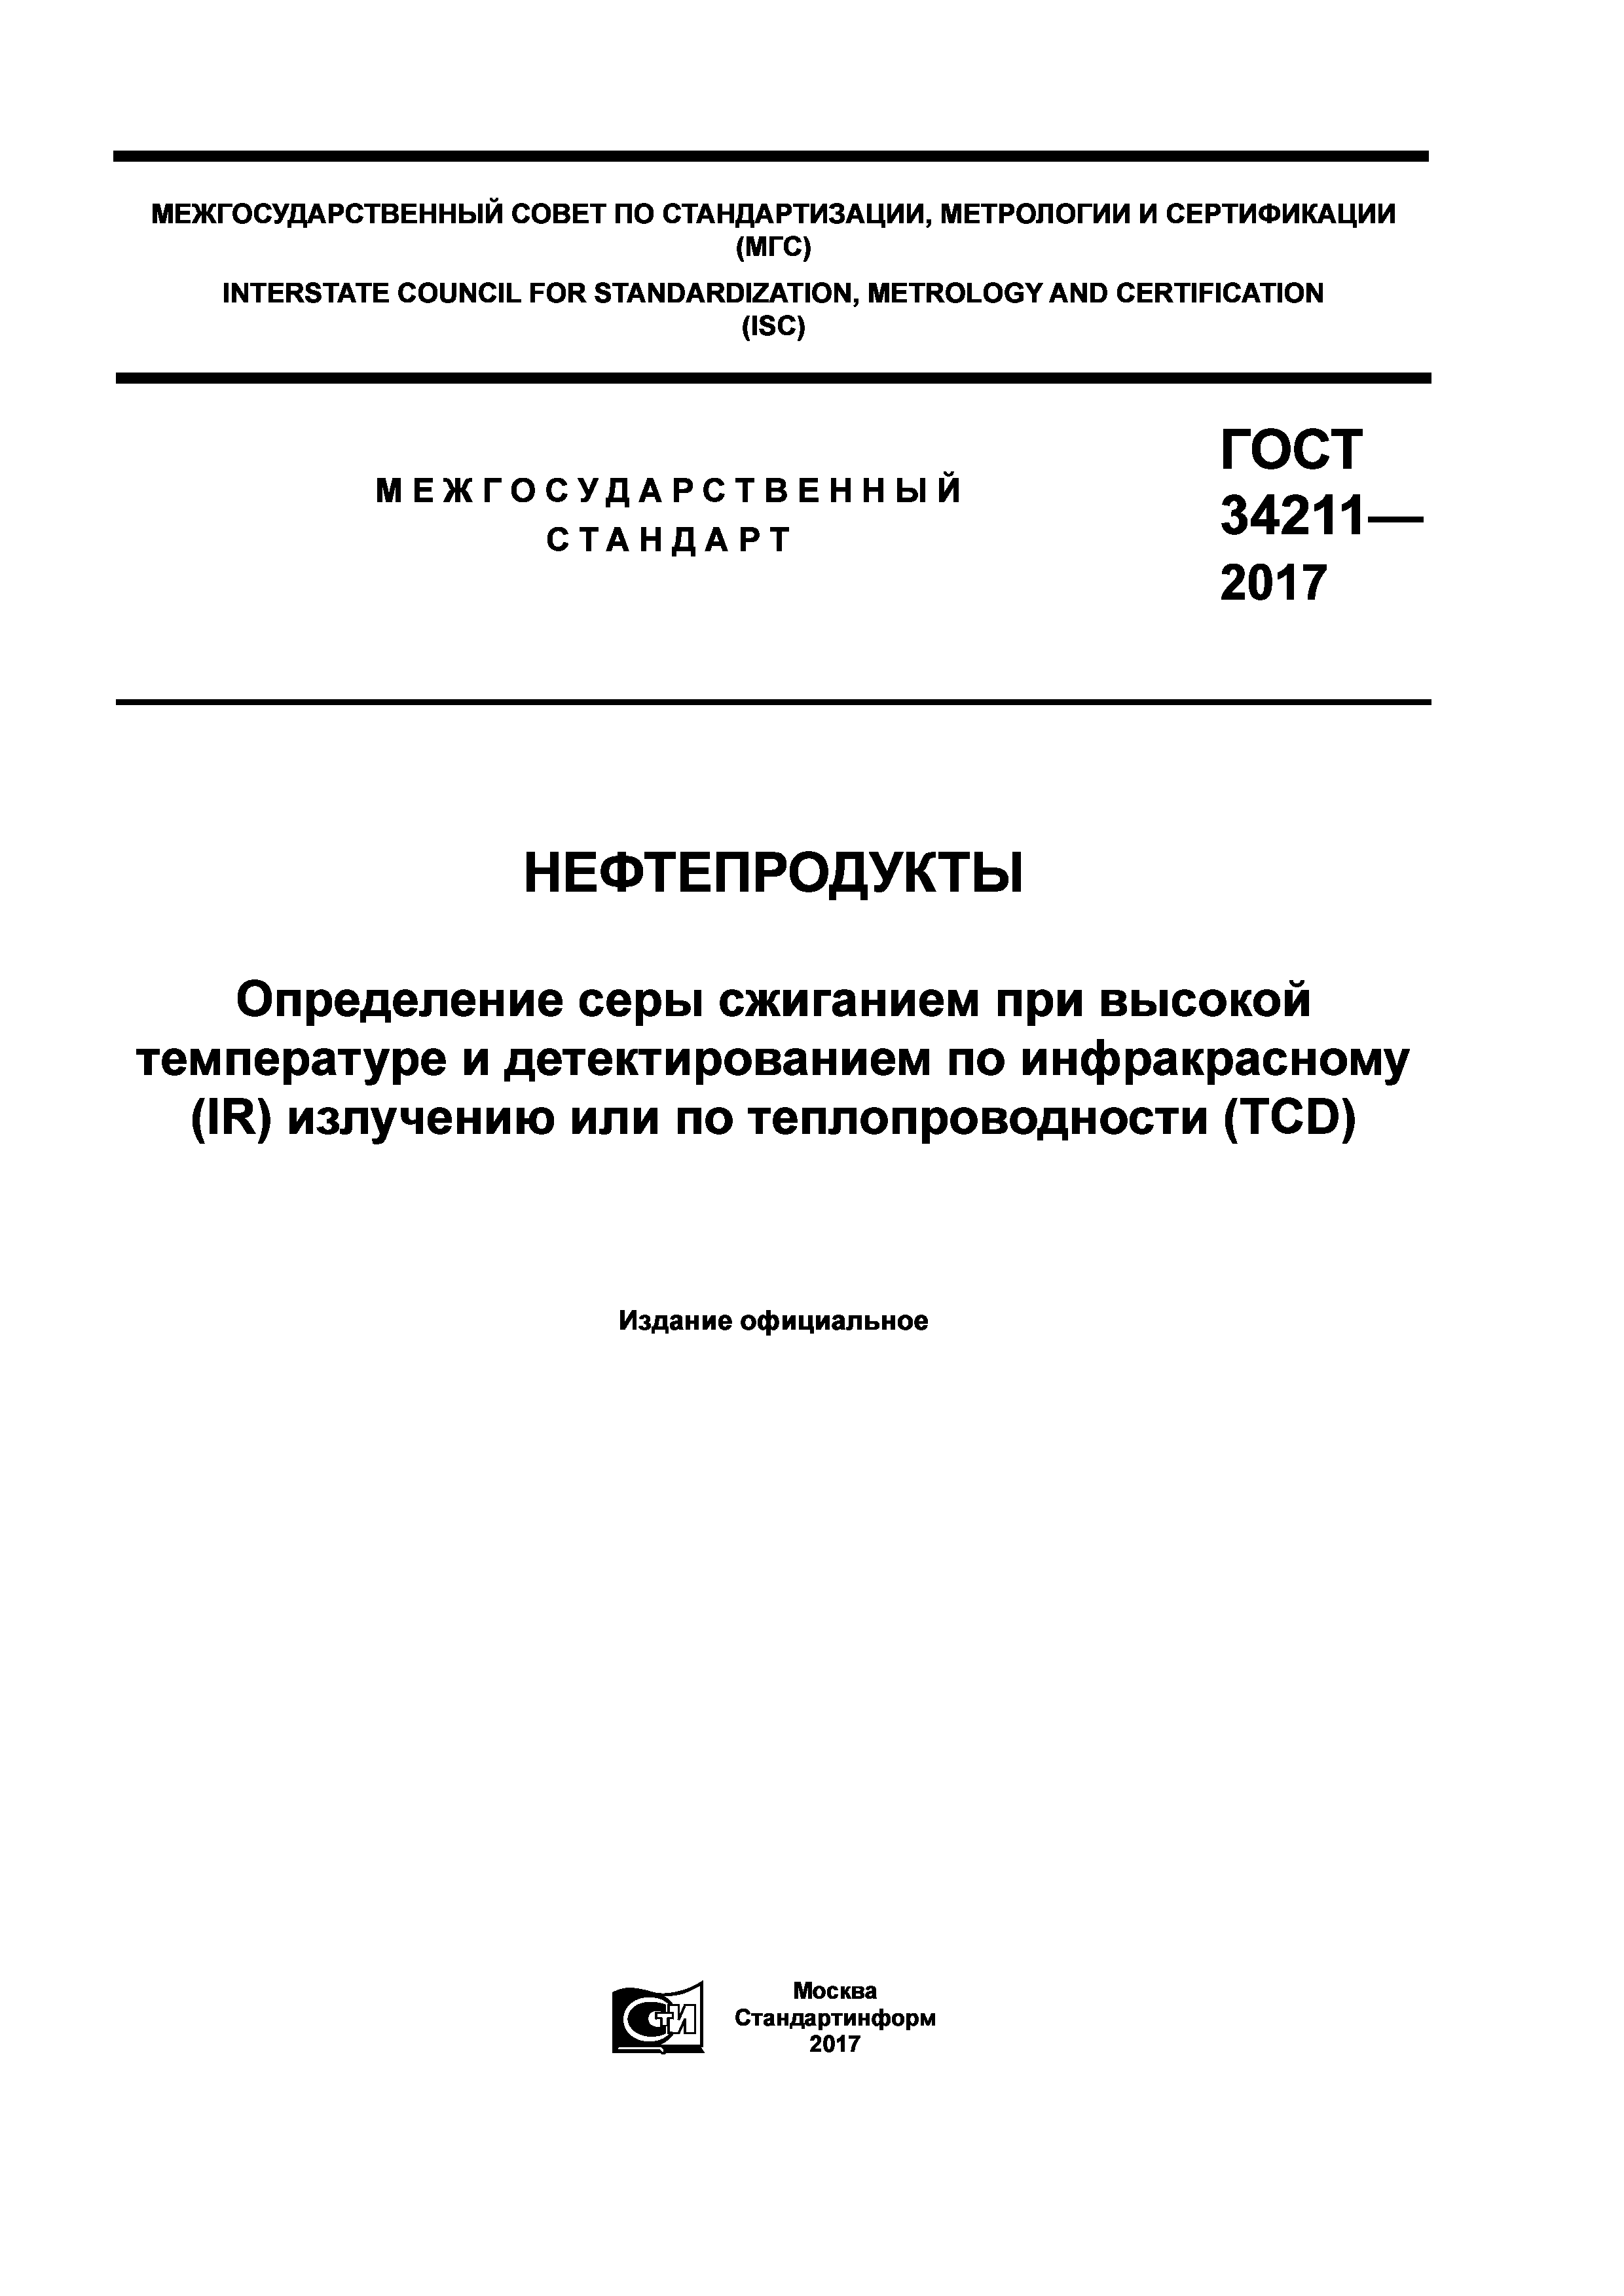 ГОСТ 34211-2017